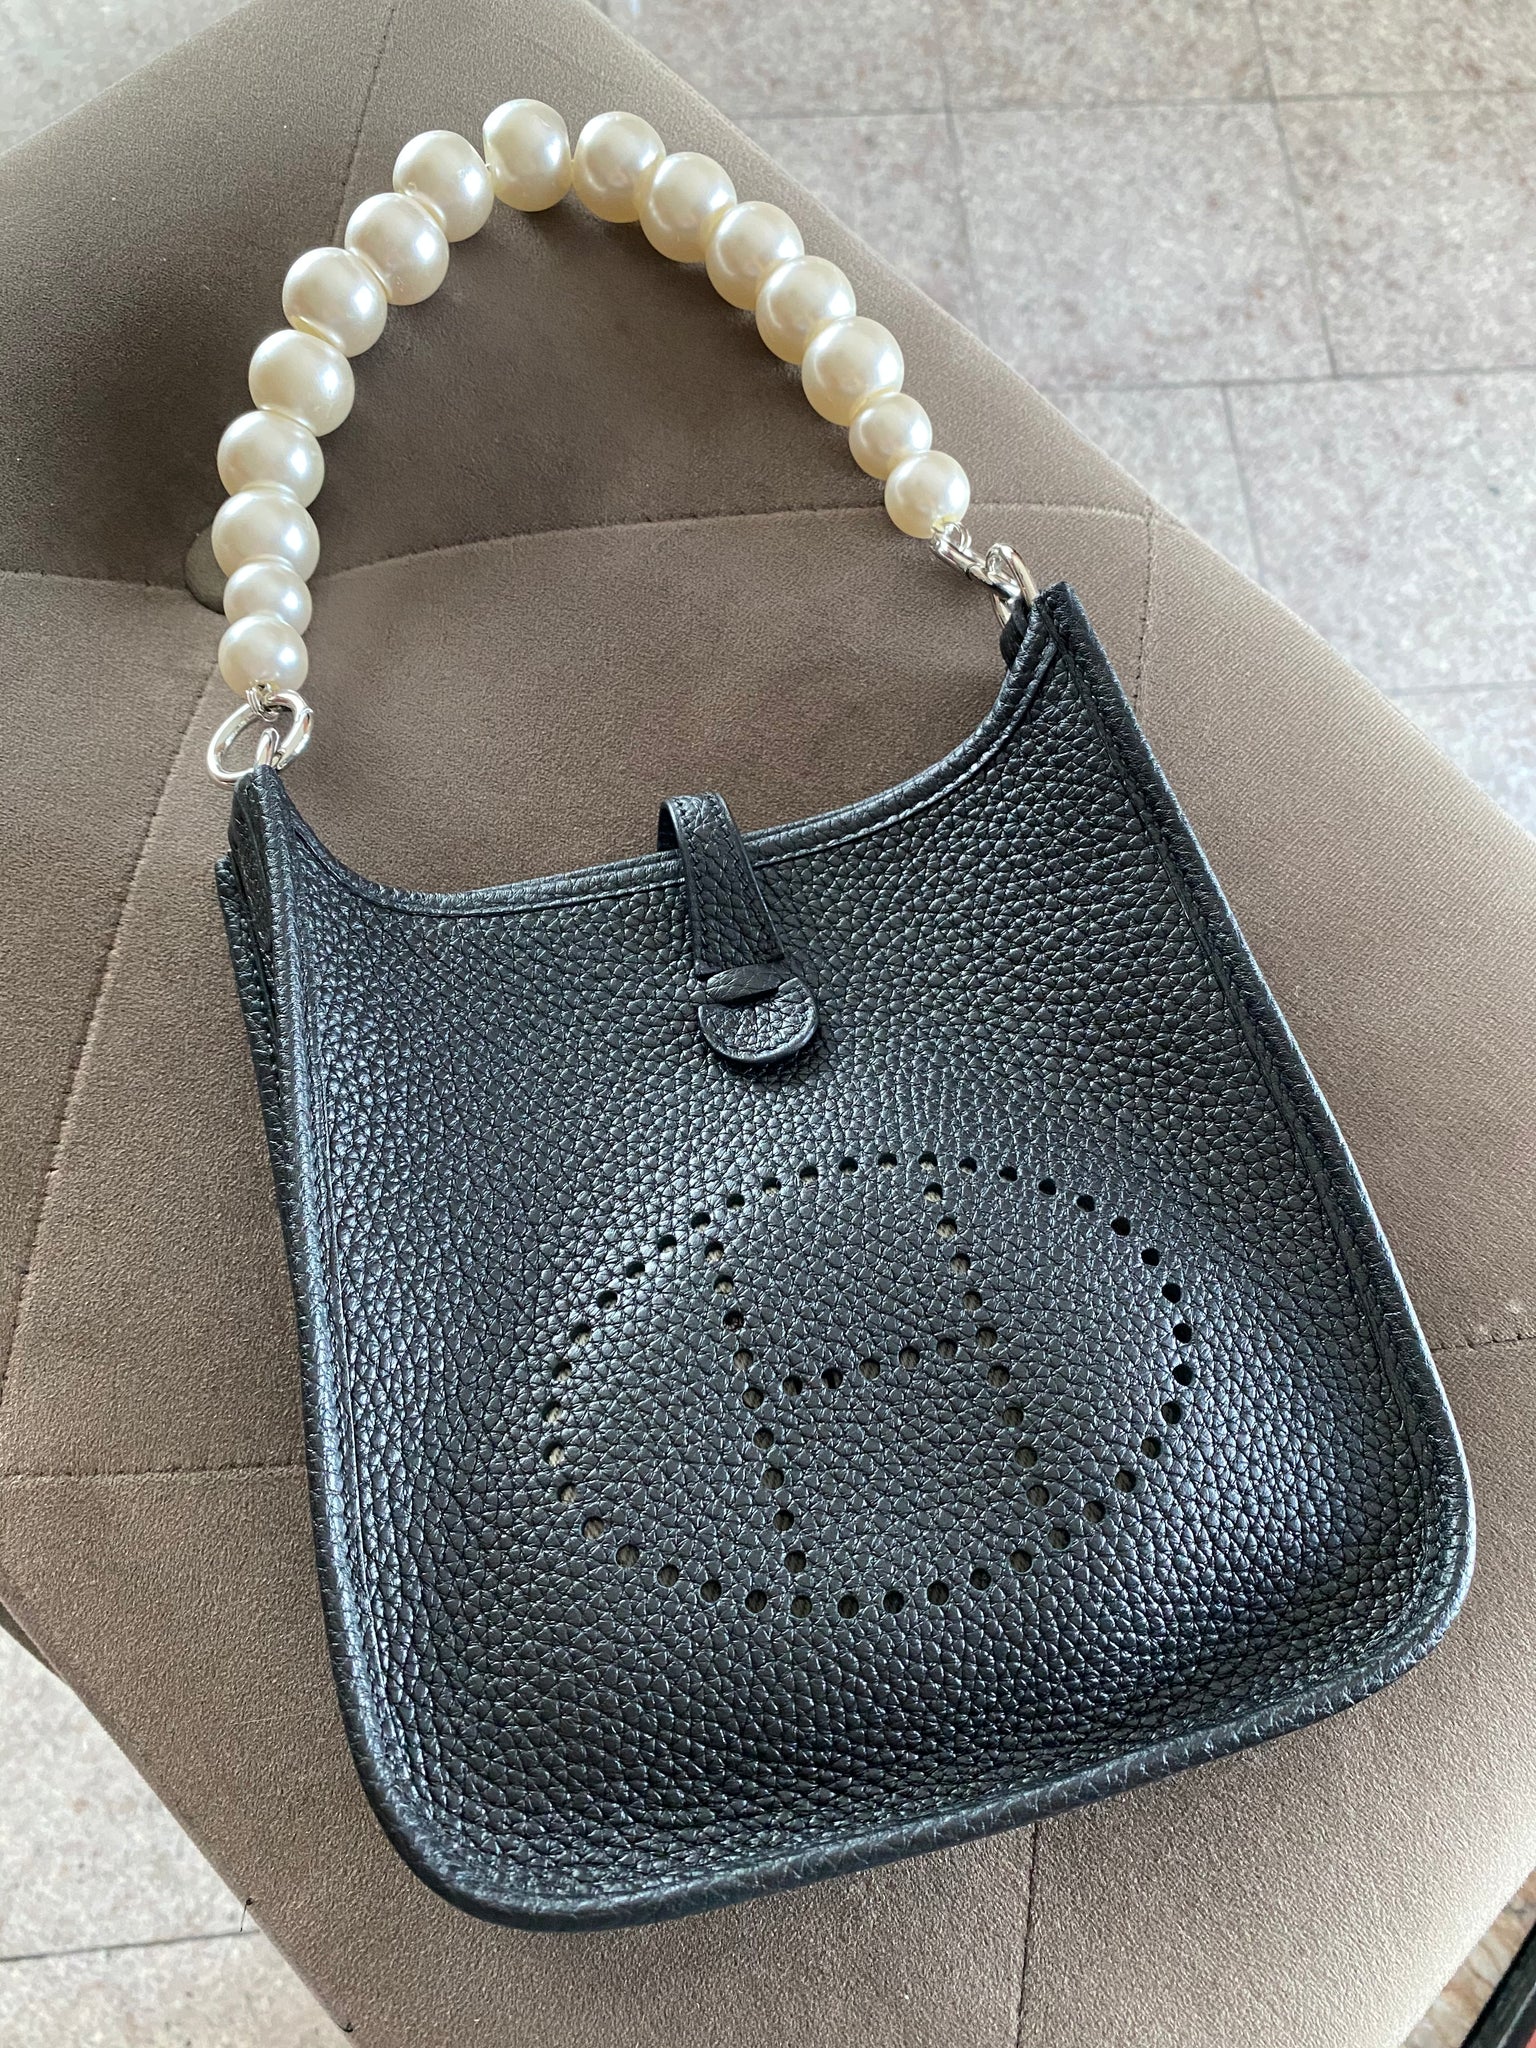 Faux Pearl Bag Strap/handle